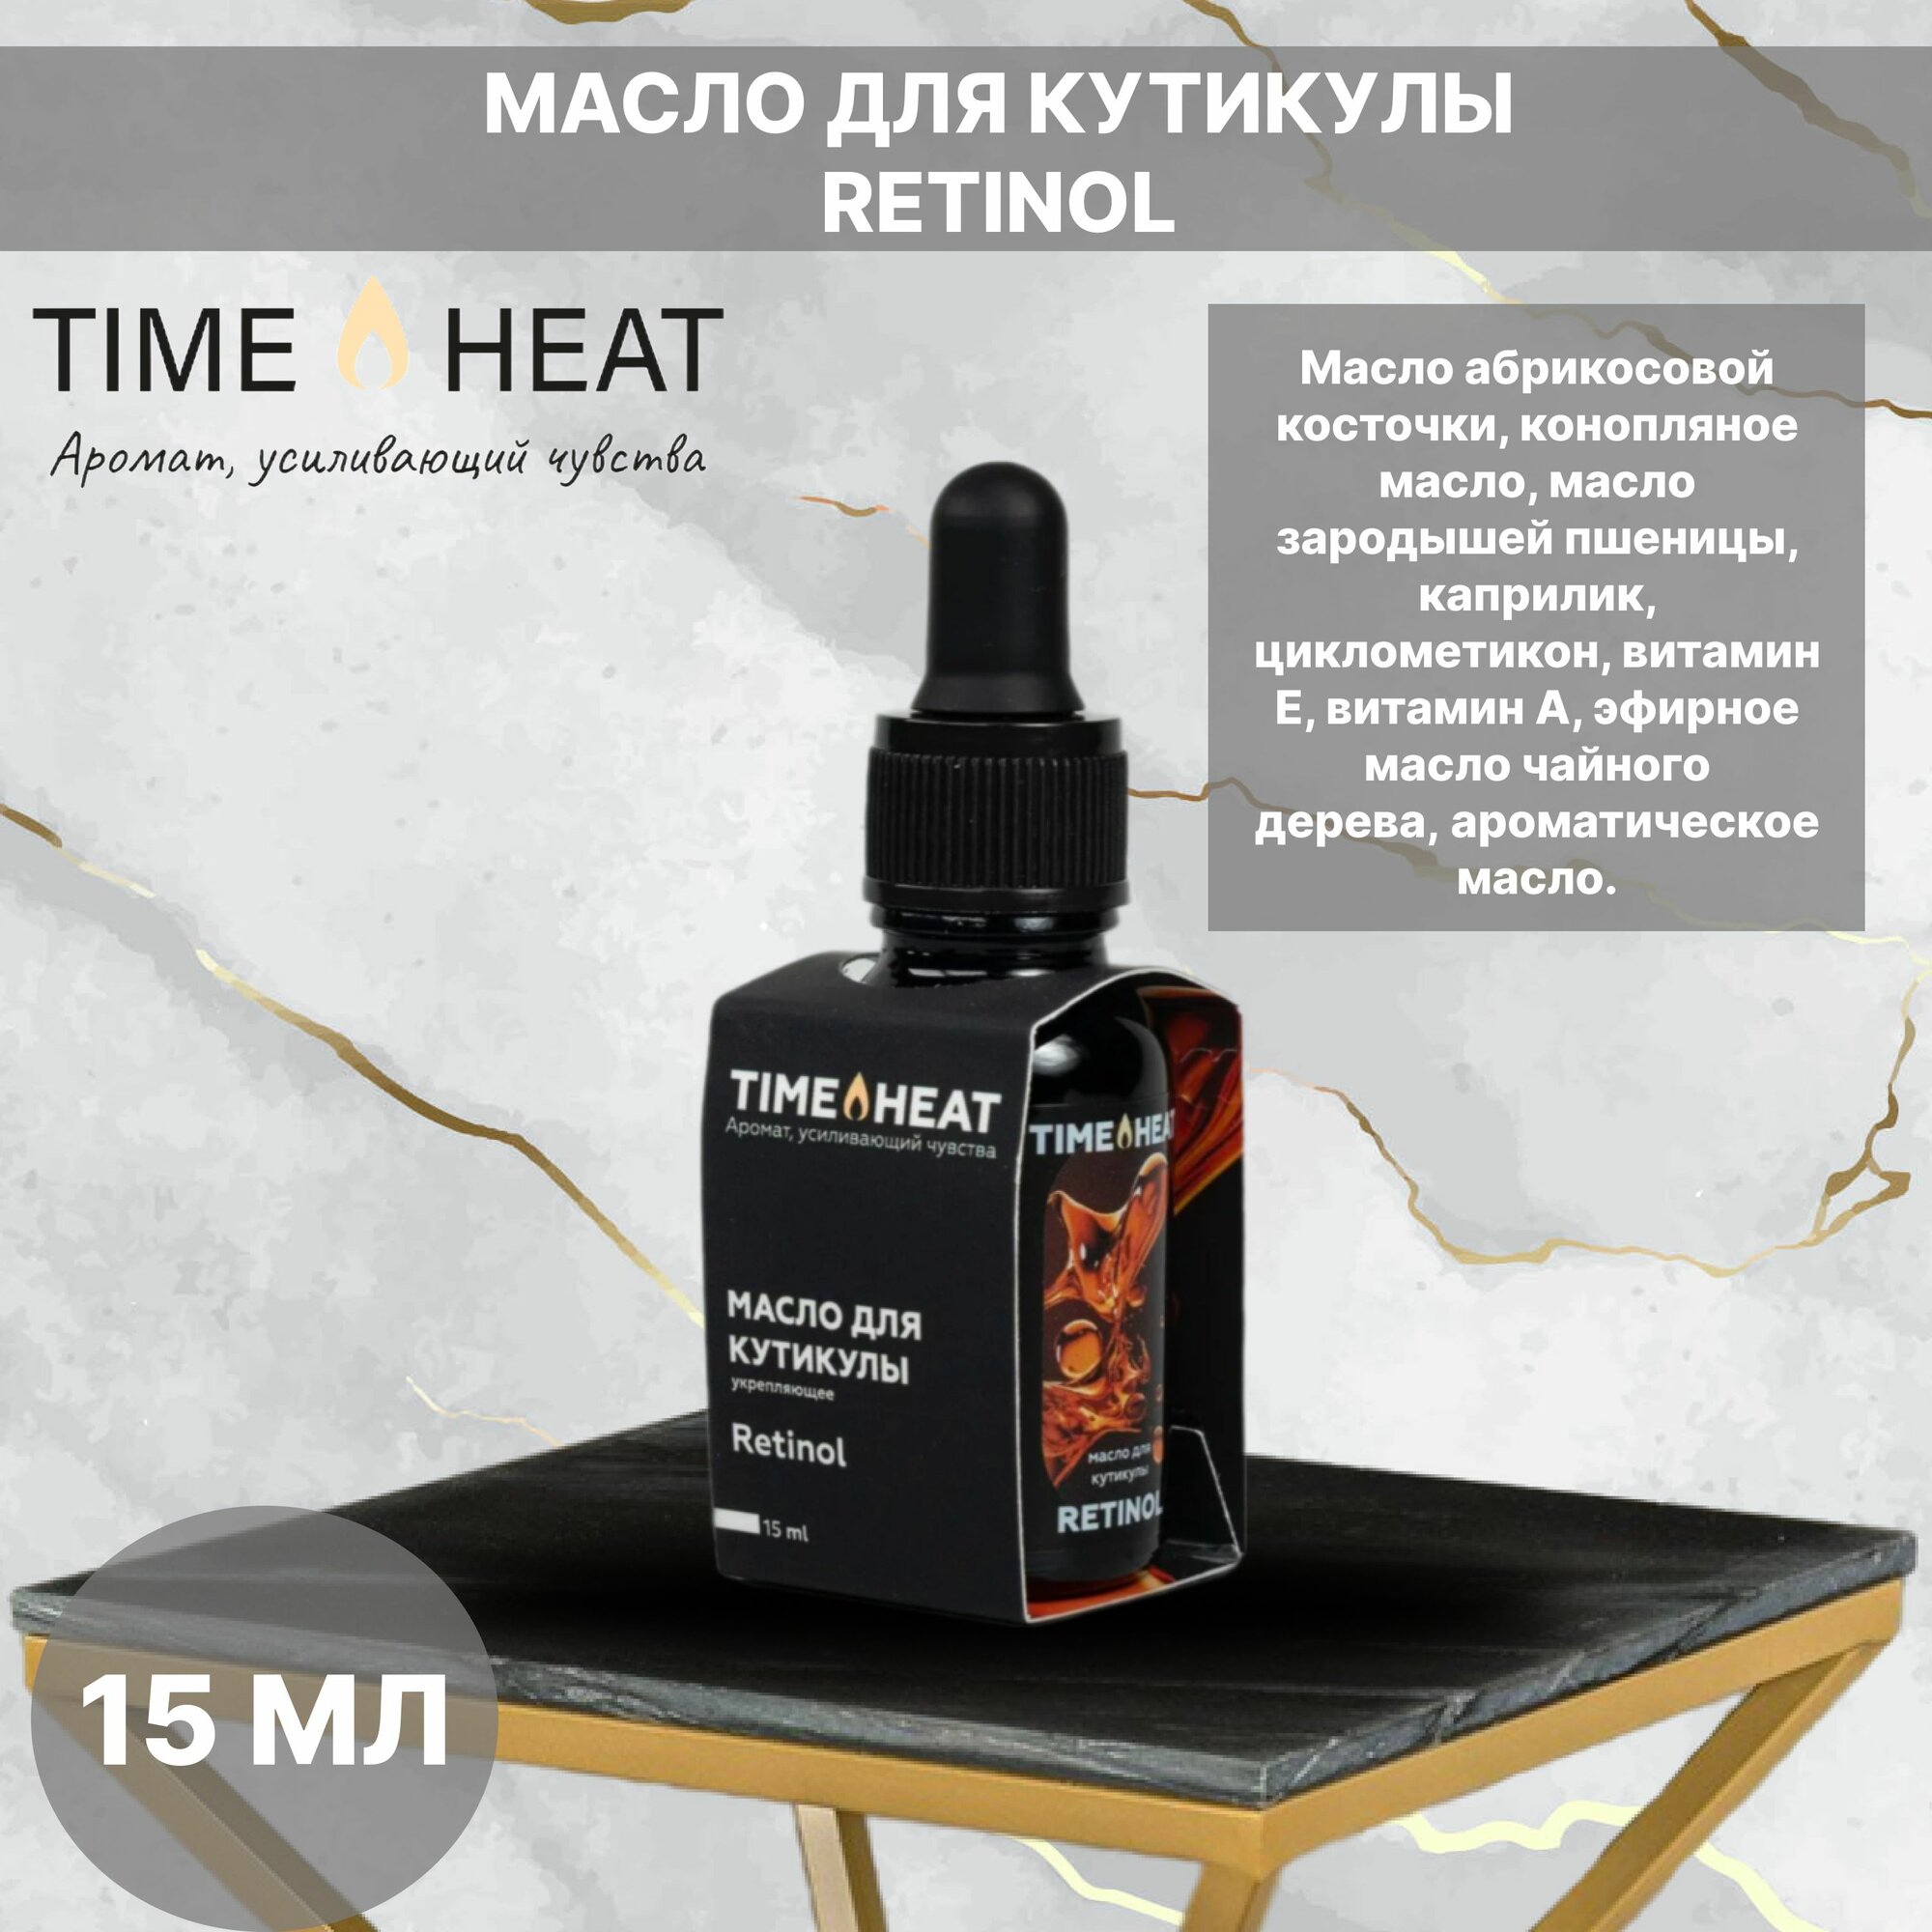 TIME HEAT "масло для кутикулы RETINOL", 15 мл